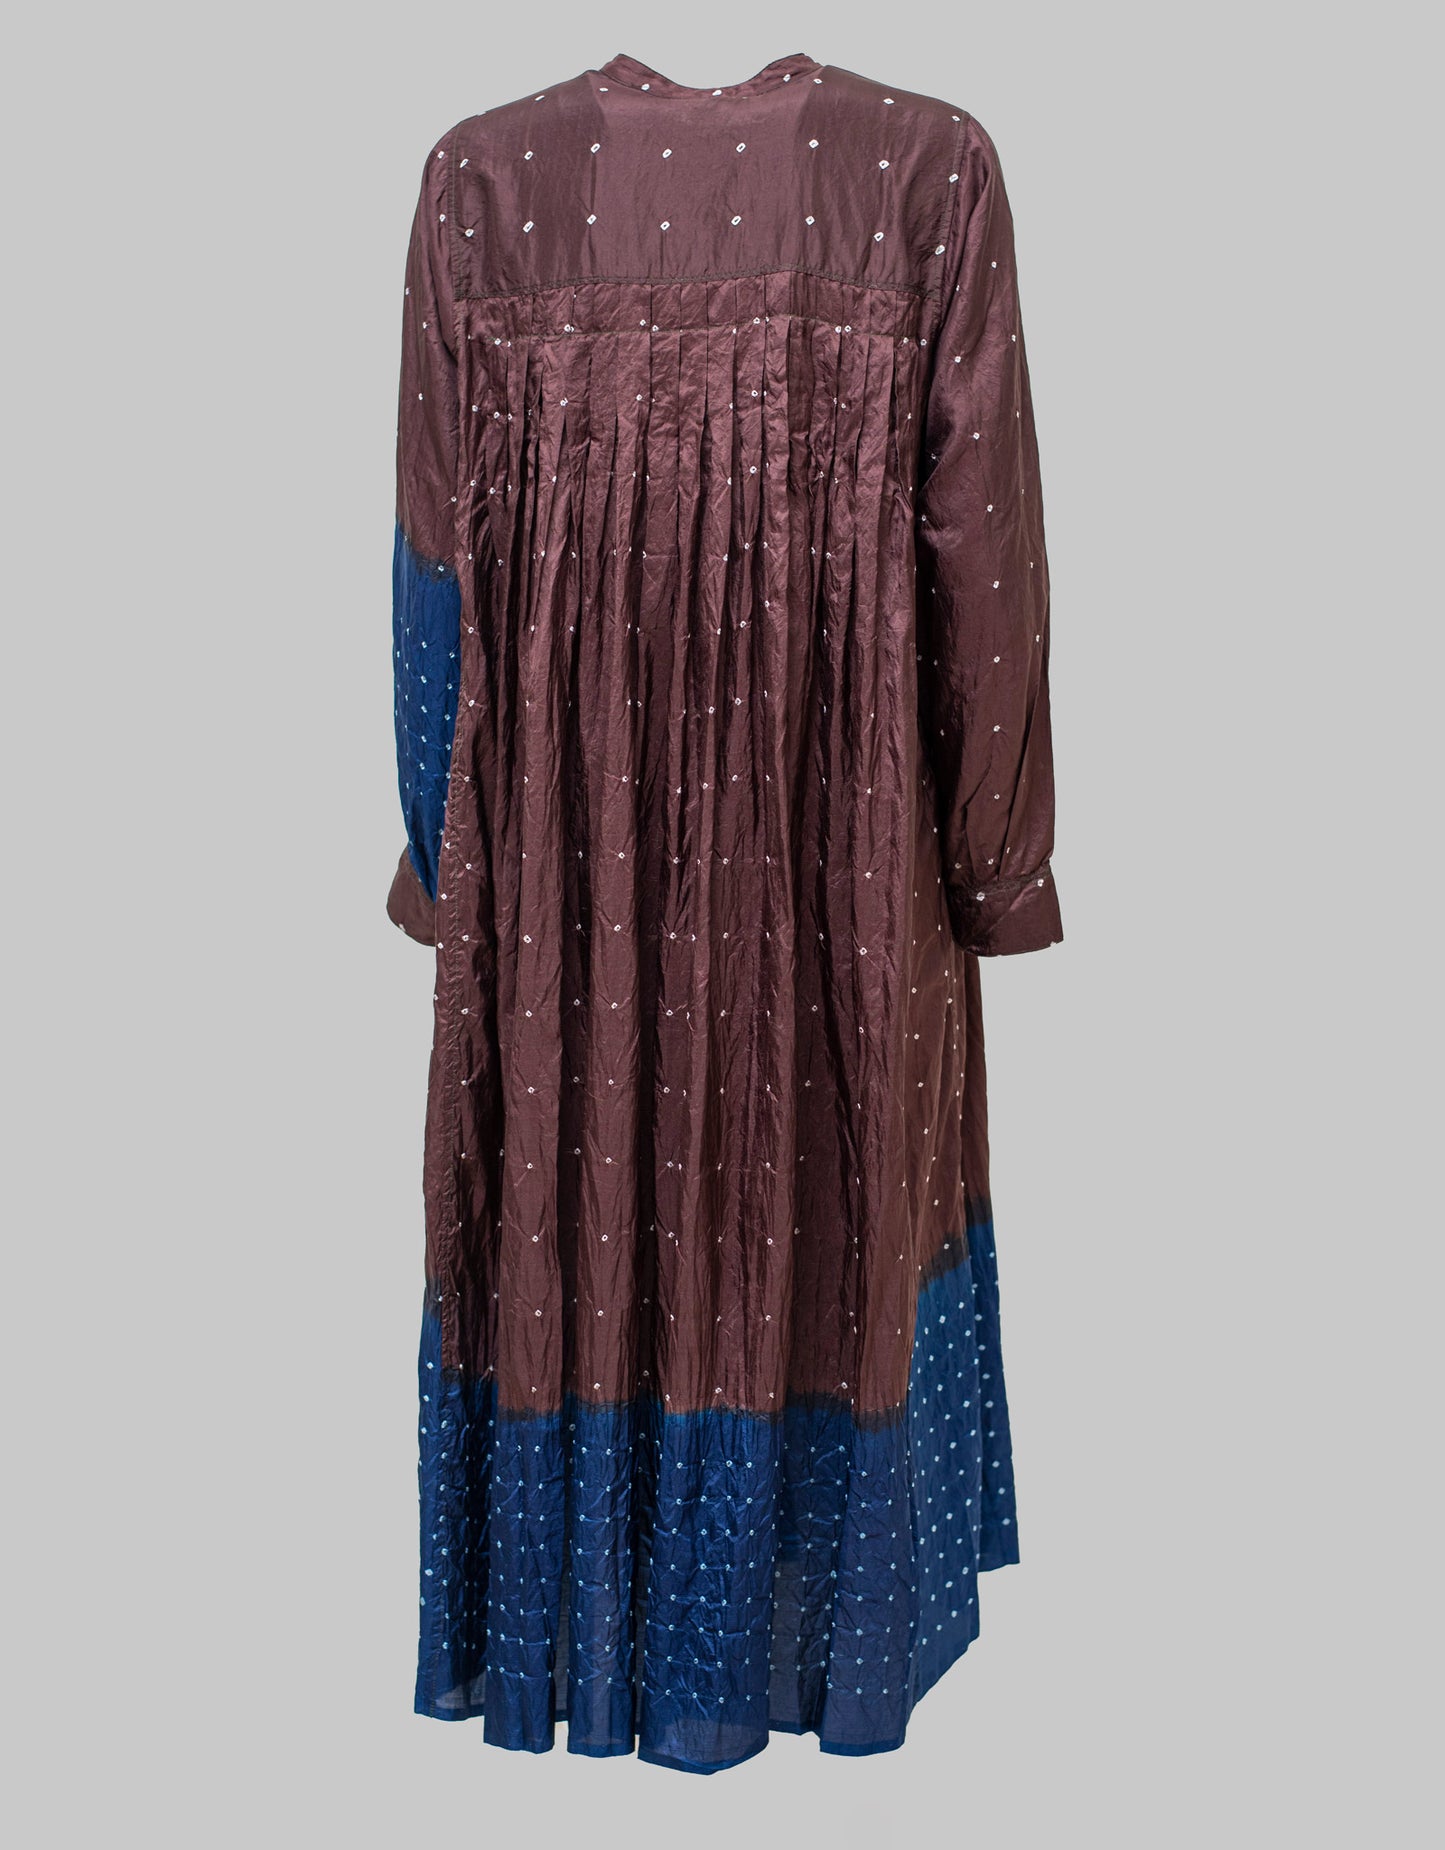 Nilgiri - 48 dress